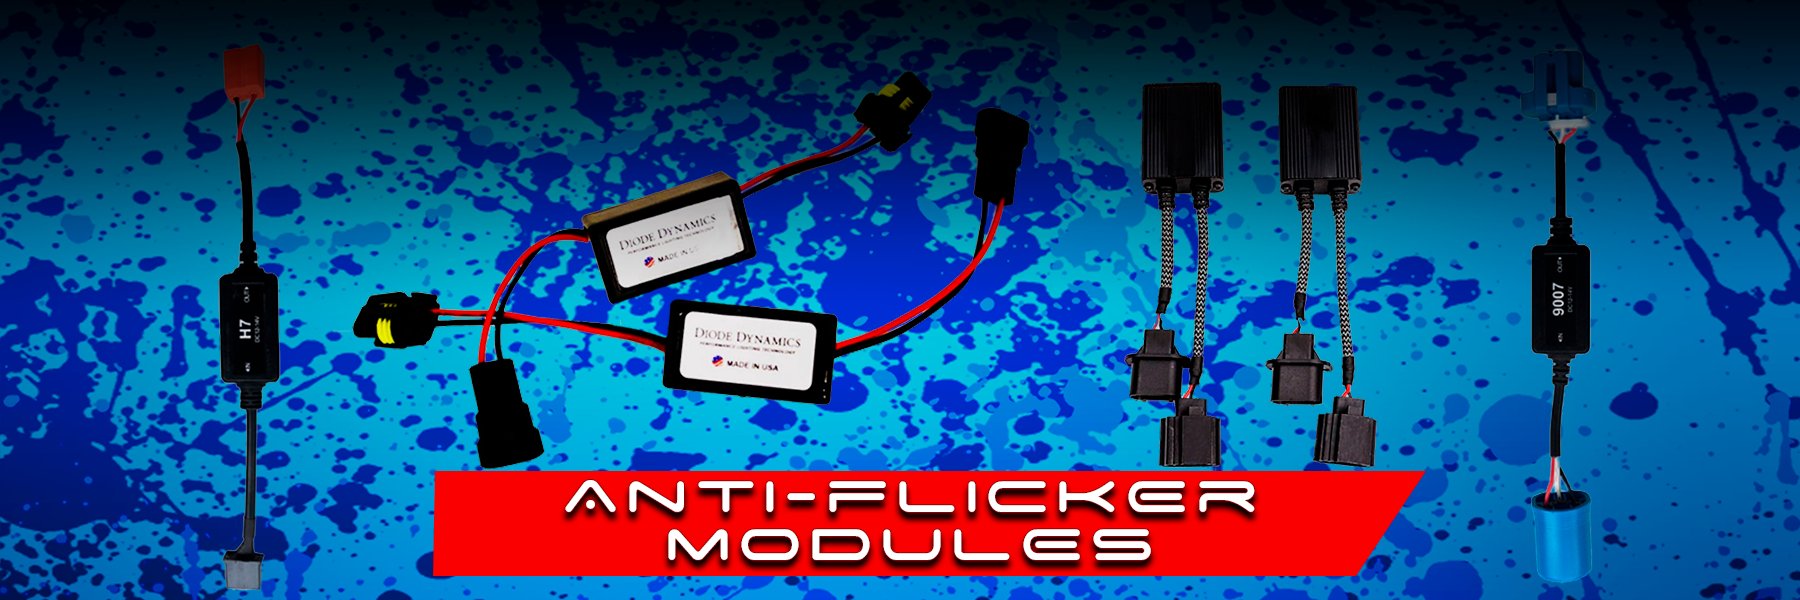 Anti-Flicker Modules